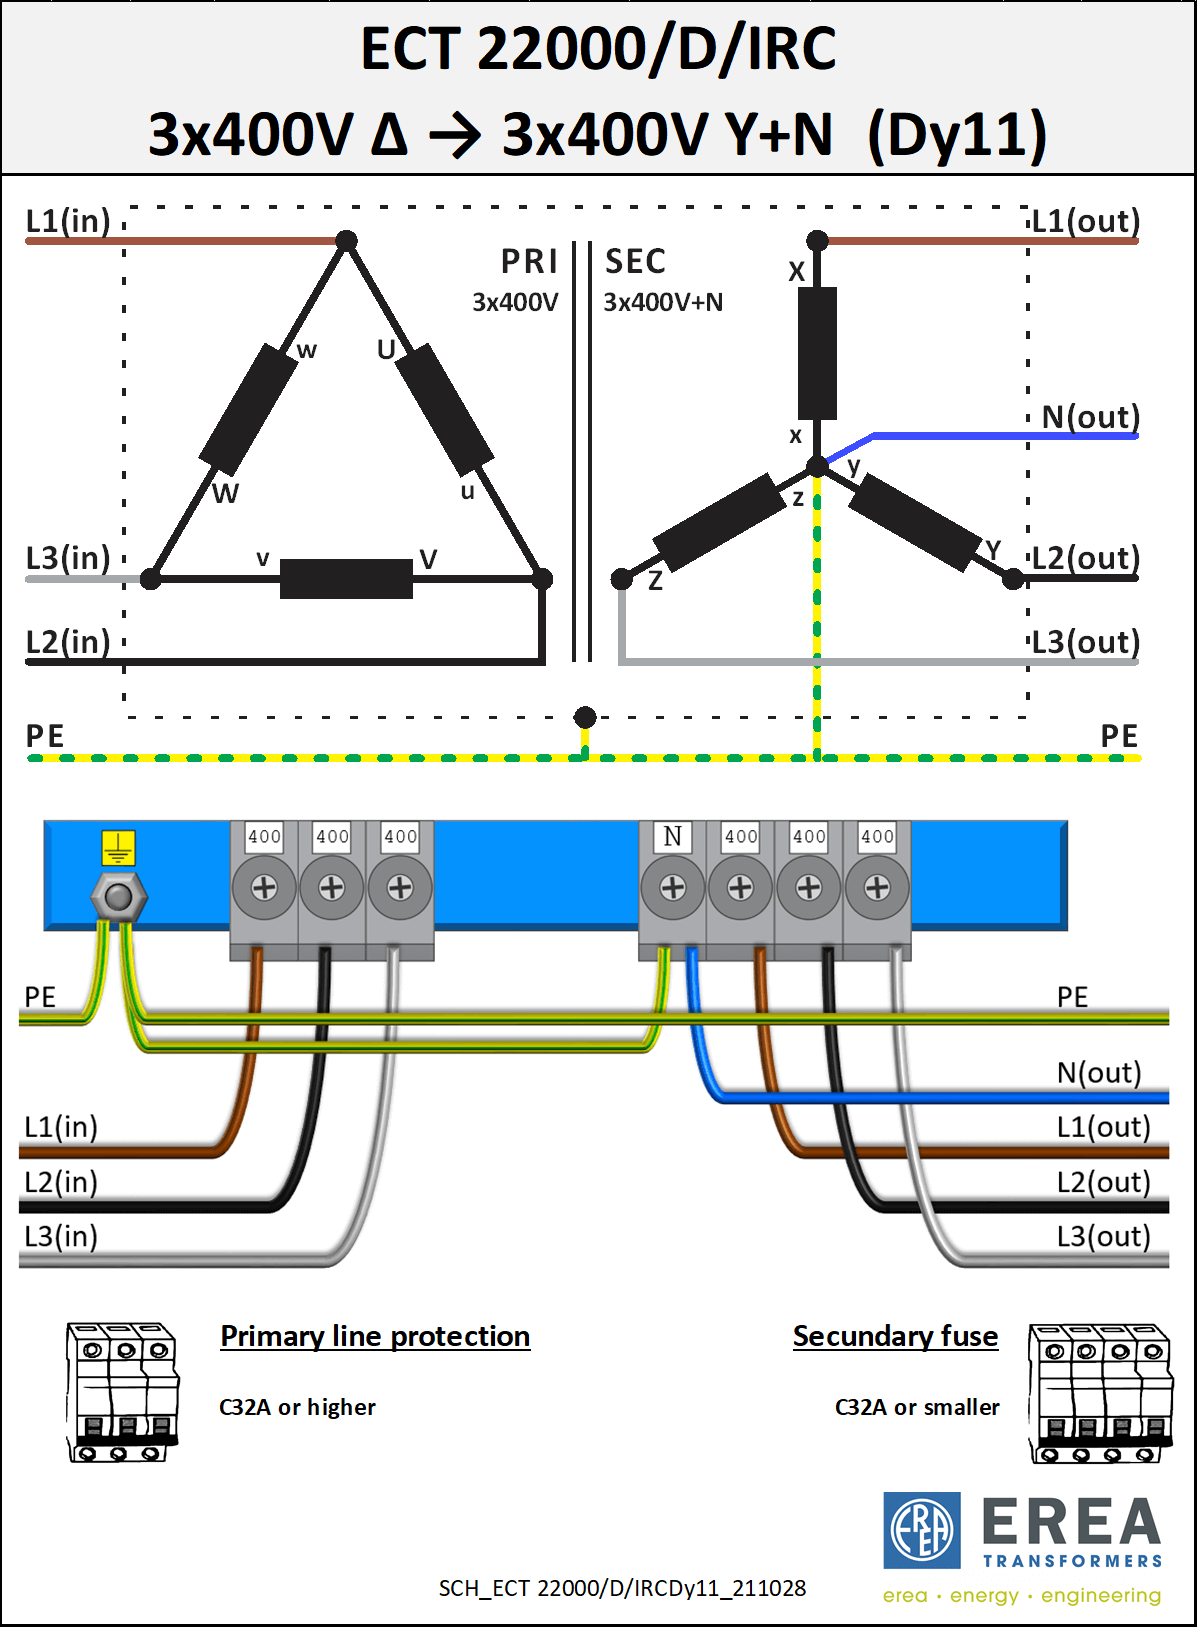 EREA 3 phase transformer Upri 400V ∆ // Usec 400V Y+N  22000VA (22KVA) ECT 22000/D/IRC